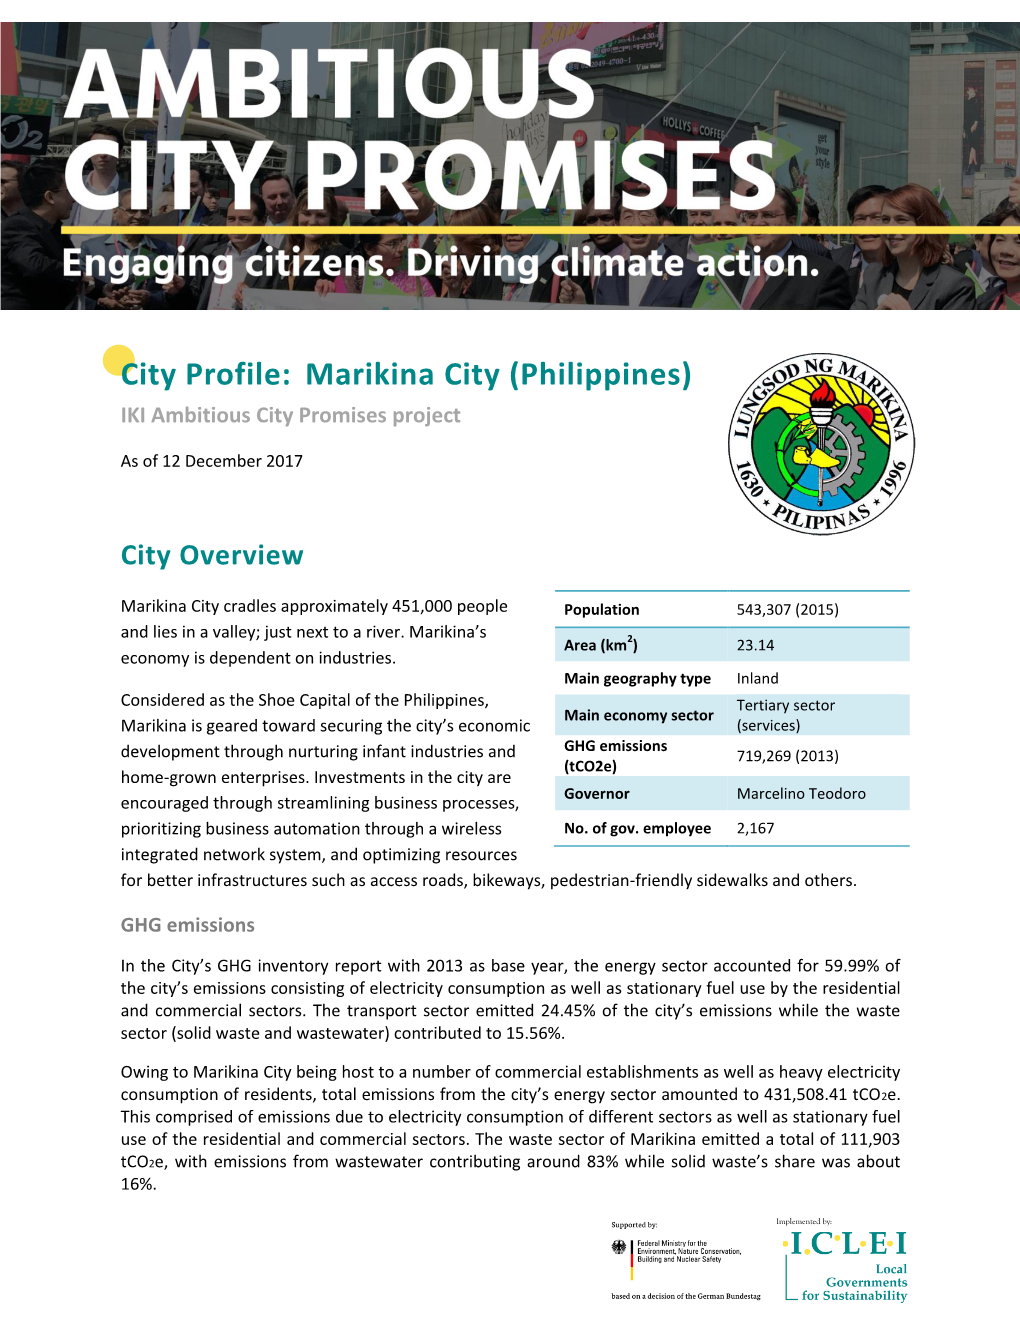 Marikina City (Philippines) IKI Ambitious City Promises Project